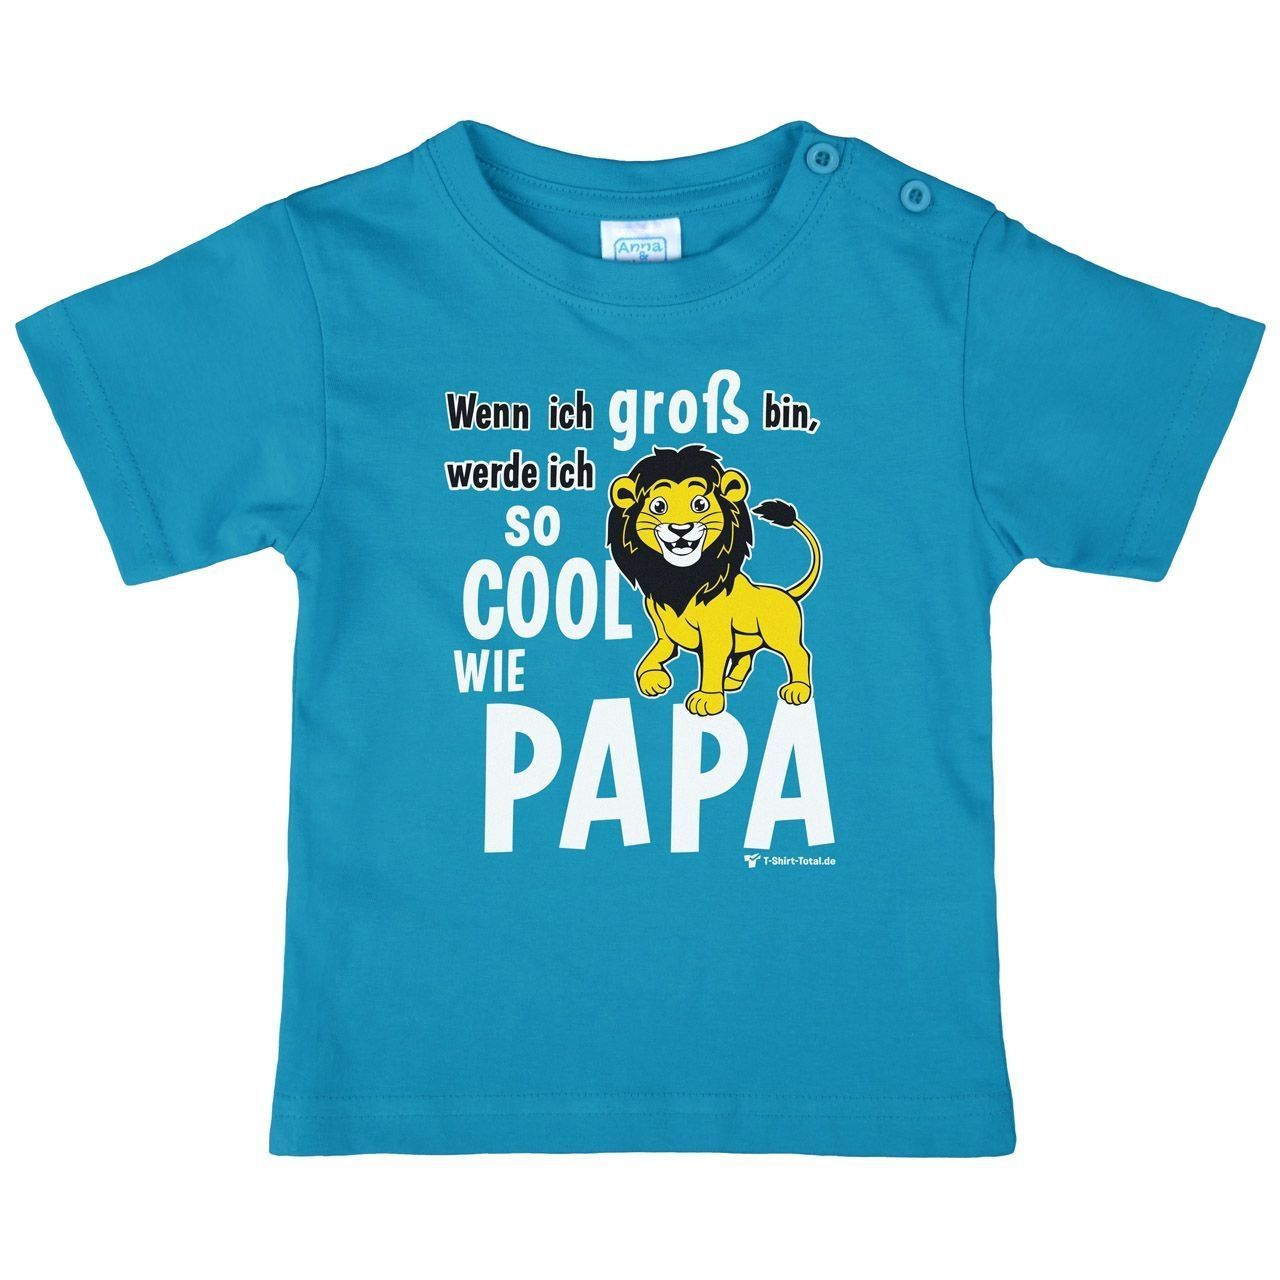 Cool wie Papa Löwe Kinder T-Shirt türkis 68 / 74